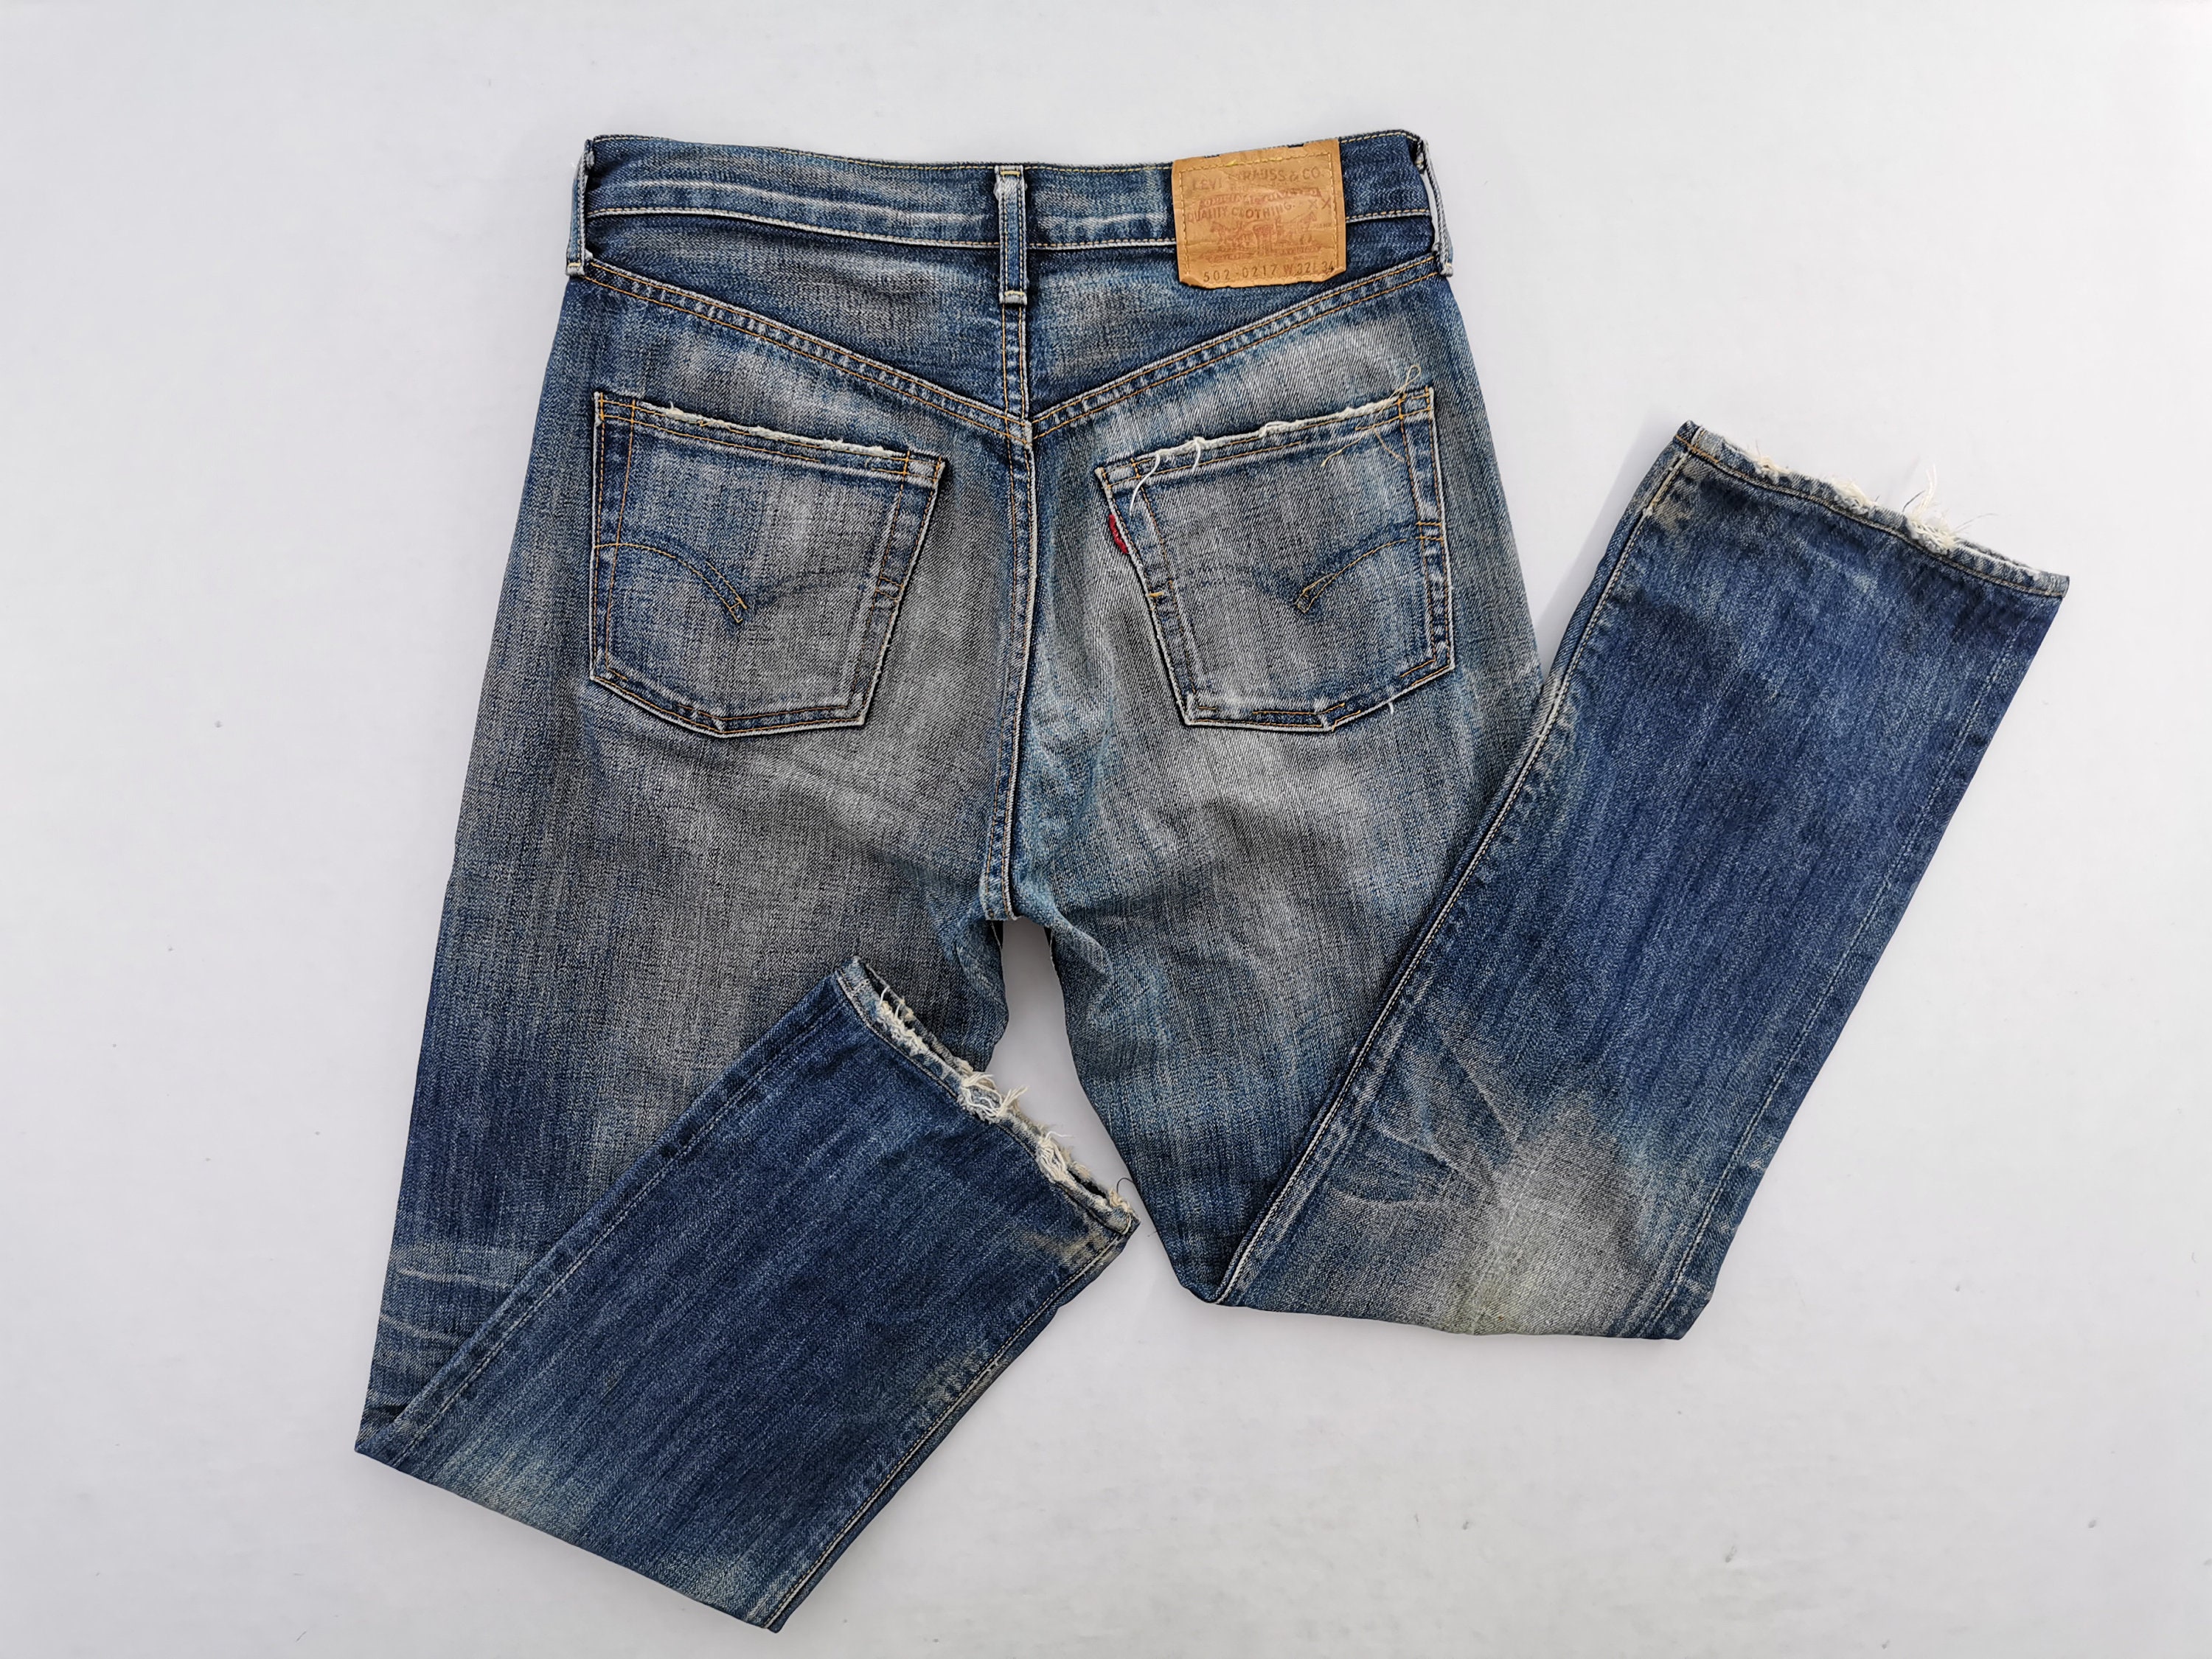 Levis Jeans Vintage Levis Lot 502 Selvedge Denim Jeans Pants Made in Japan  Size 32/33x31.5 